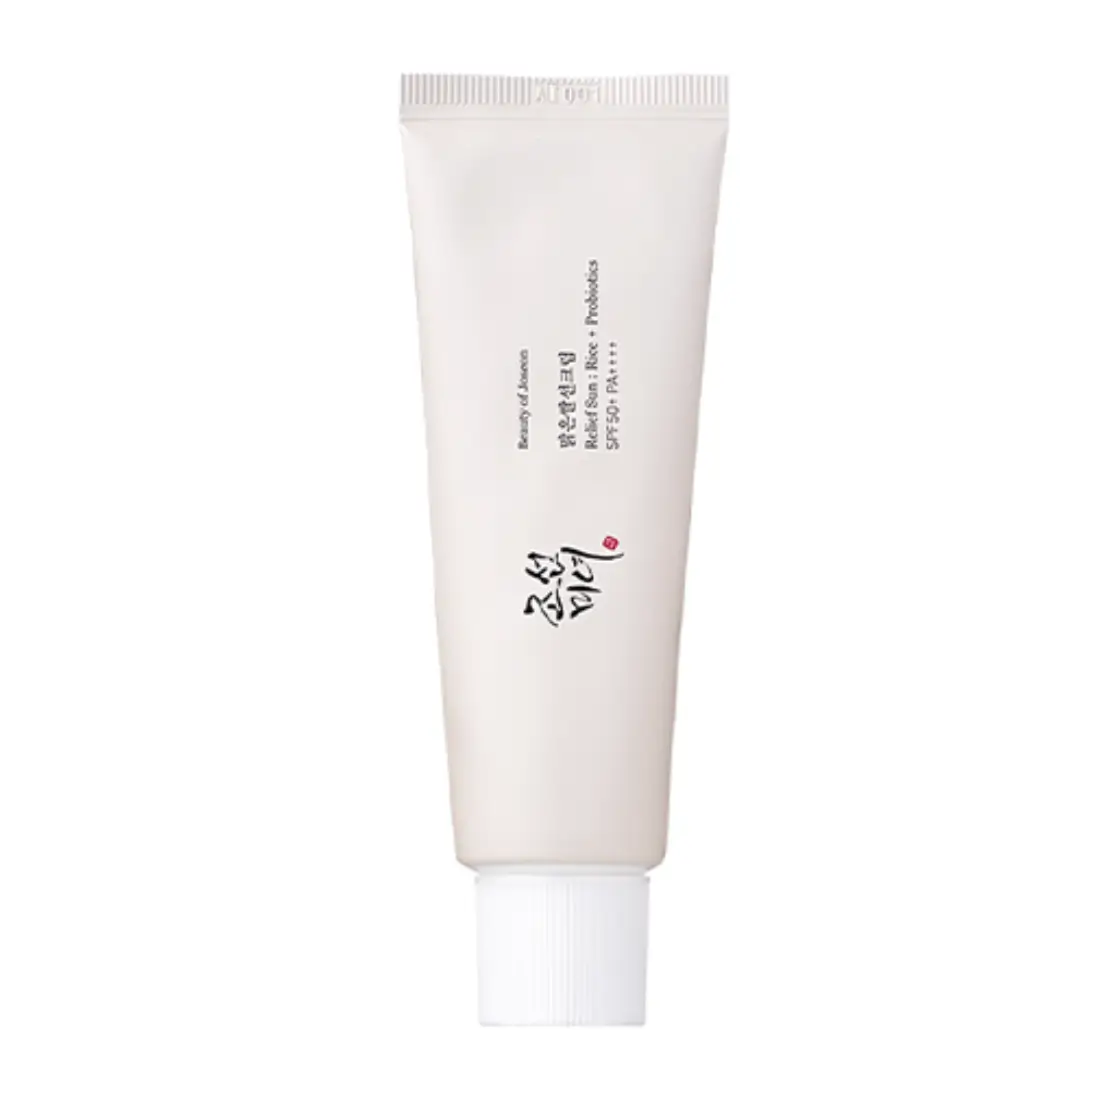 Best Korean skincare suncream- BEAUTY OF JOSEON Relief Sun SPF50+ PA++++